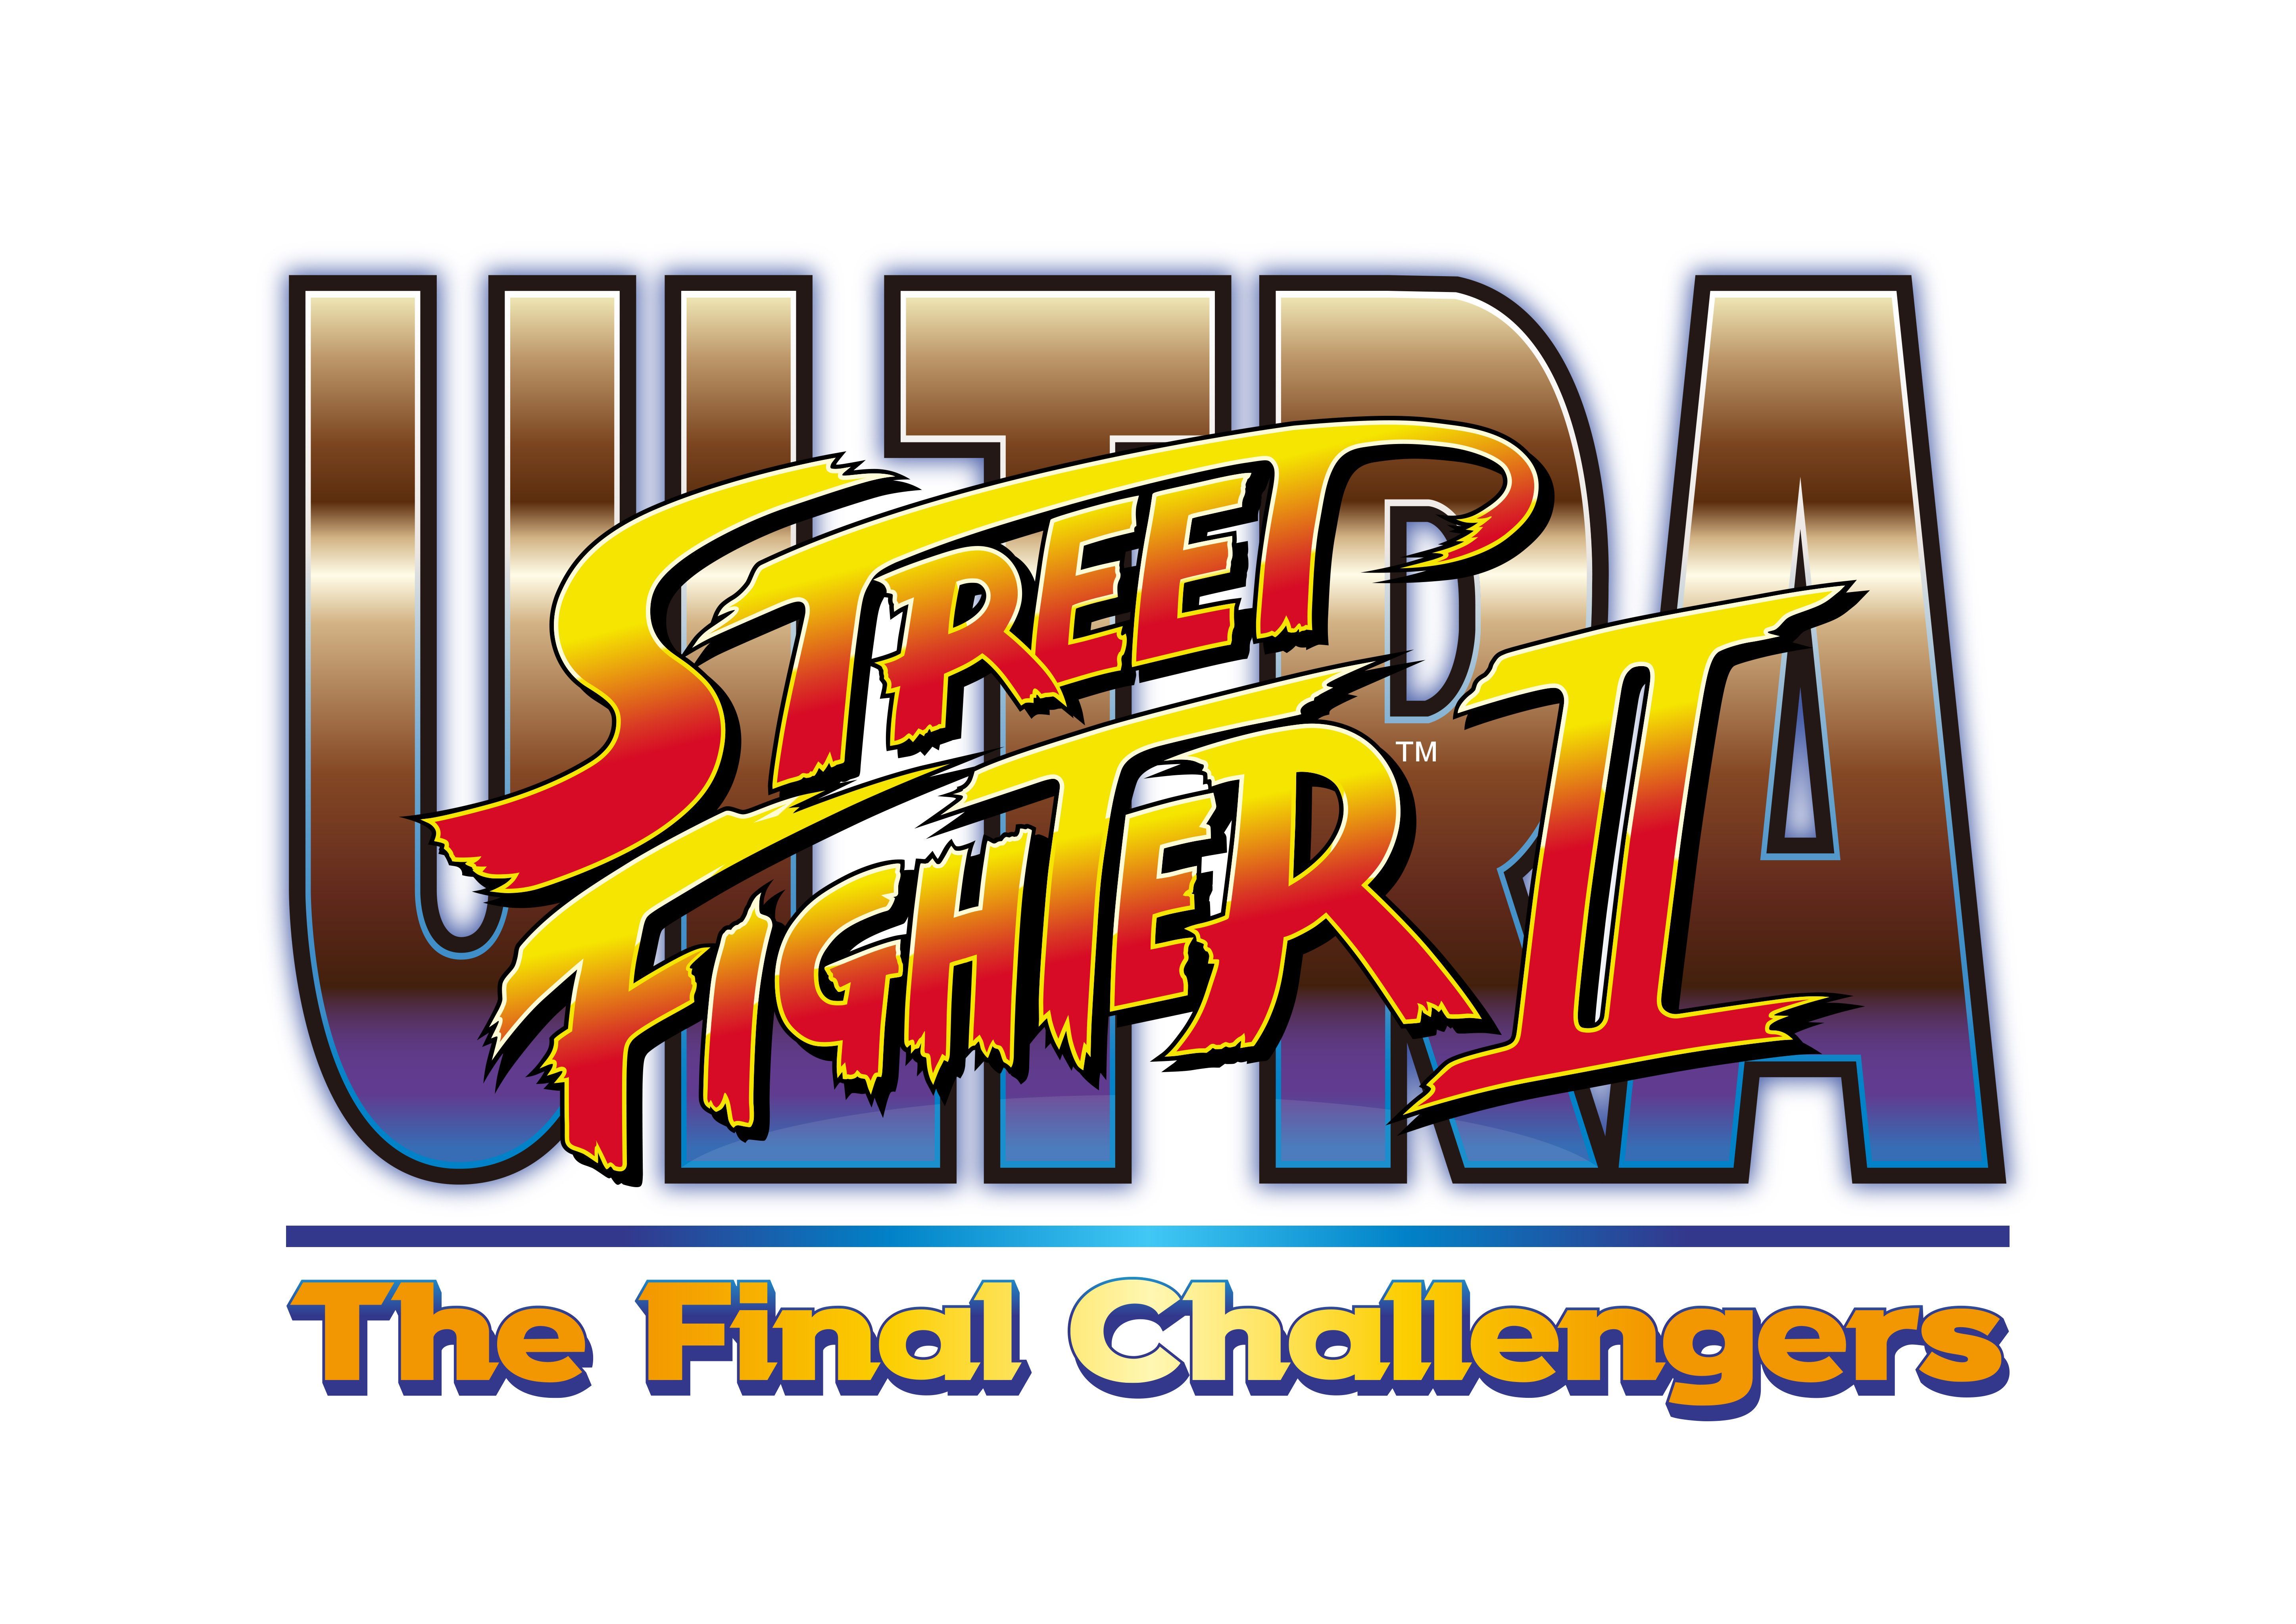 You can unlock Shin Akuma in Ultra Street Fighter 2 on Nintendo